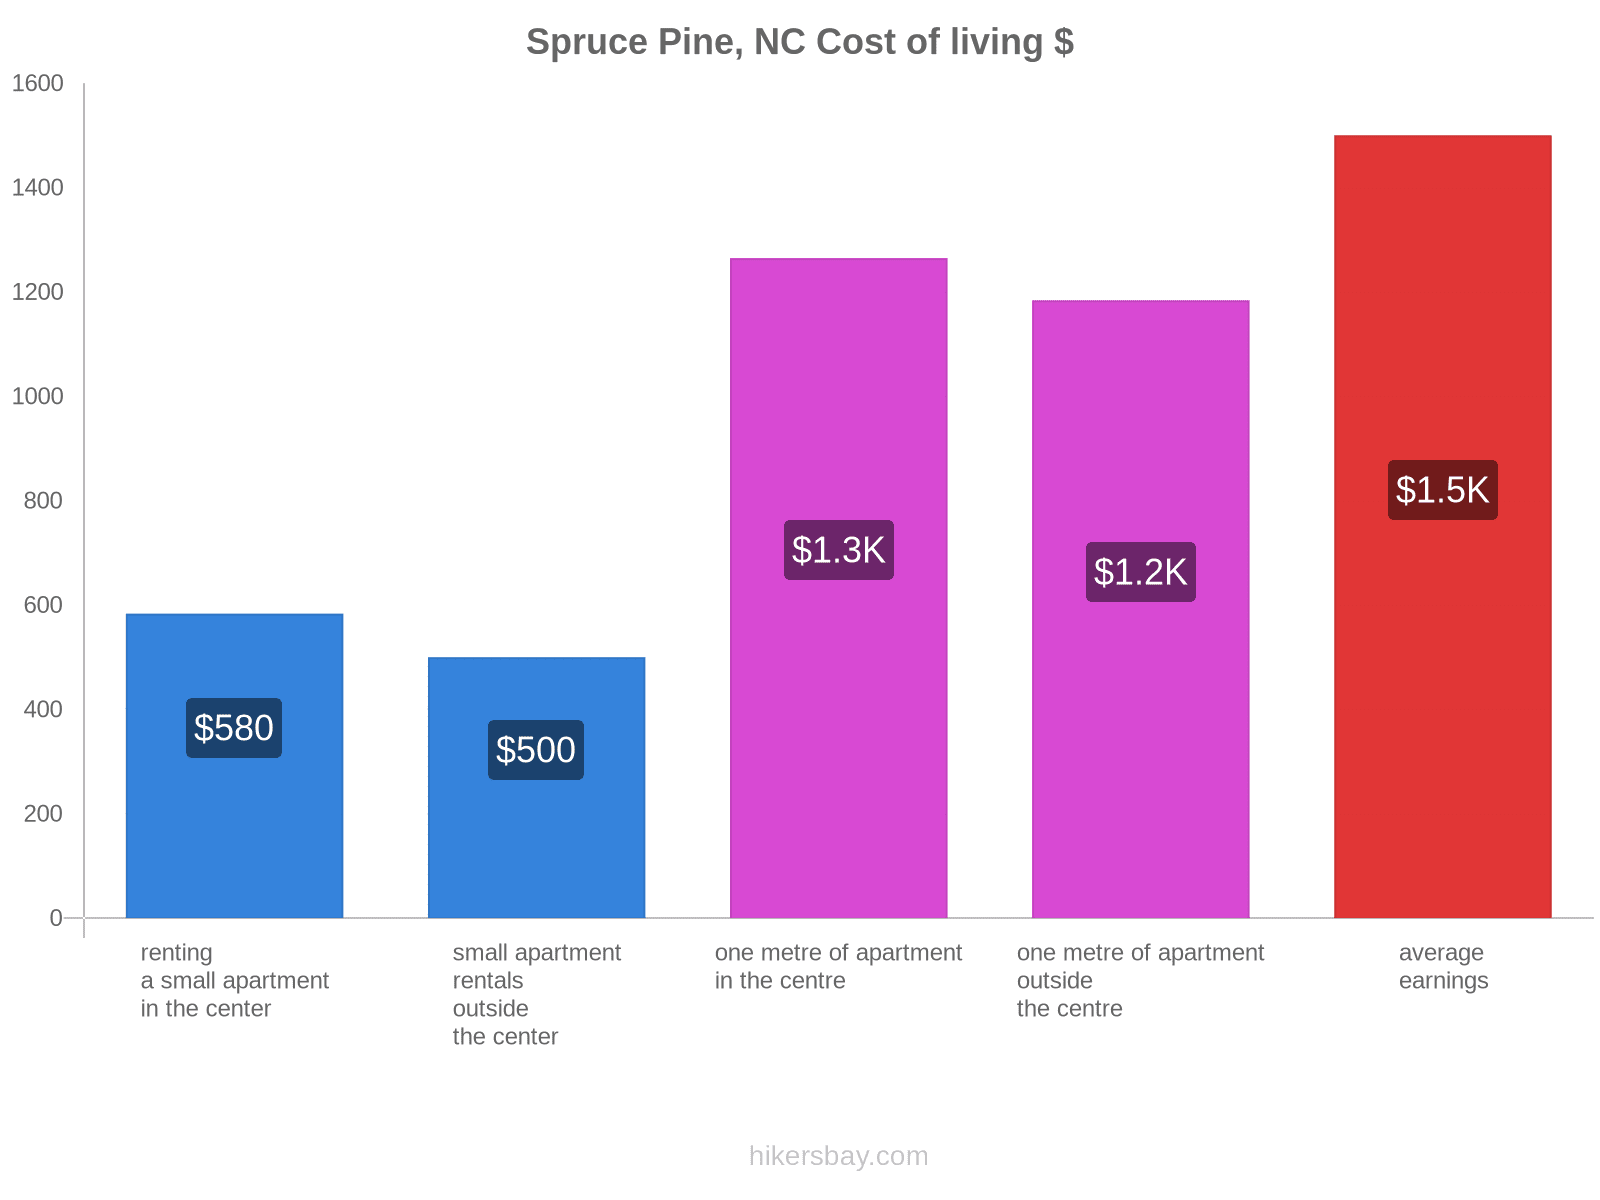 Spruce Pine, NC cost of living hikersbay.com